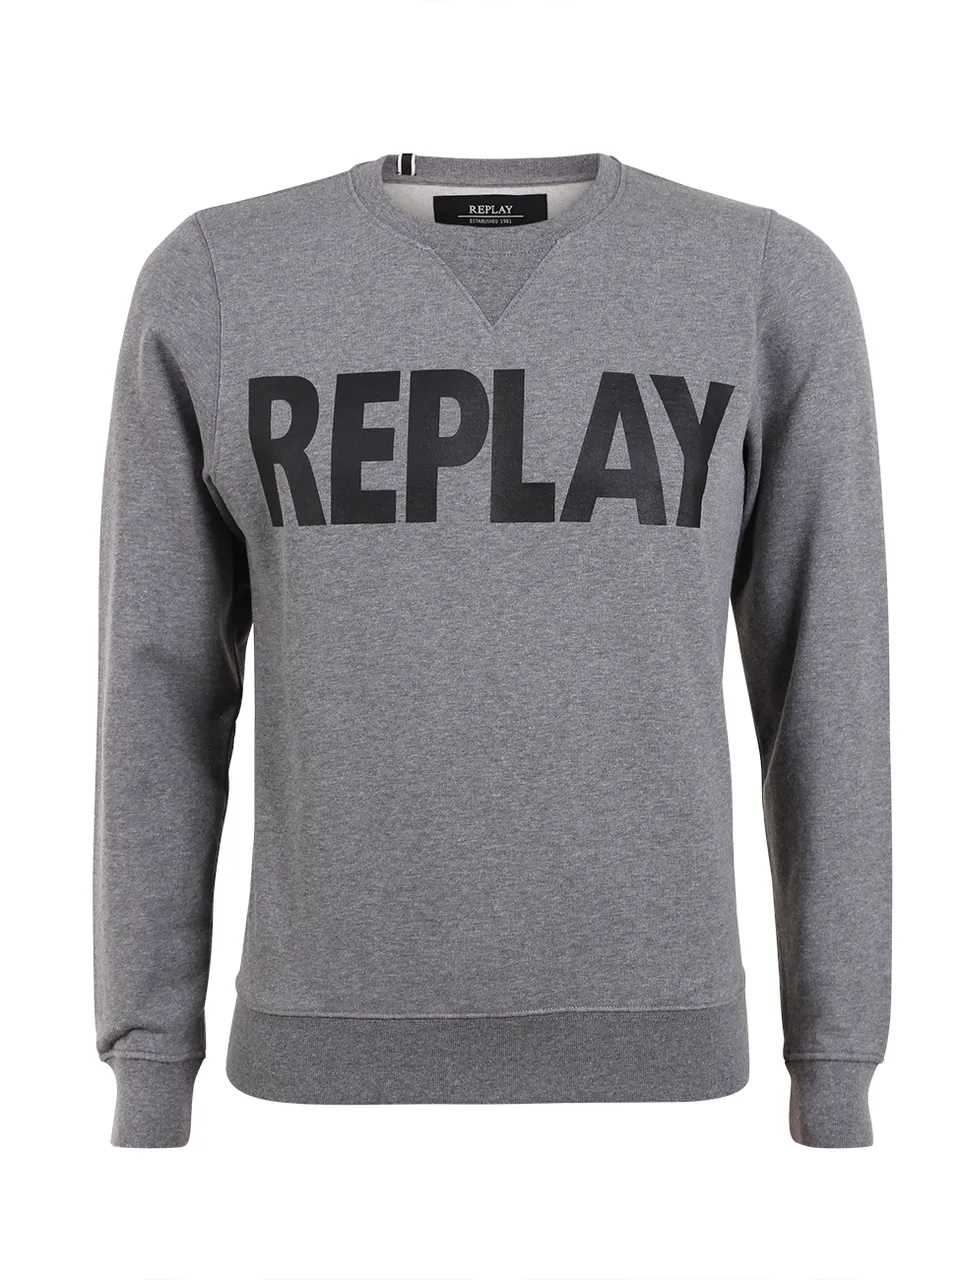 Replay Herren Rundhals-Sweater mit Frontptint